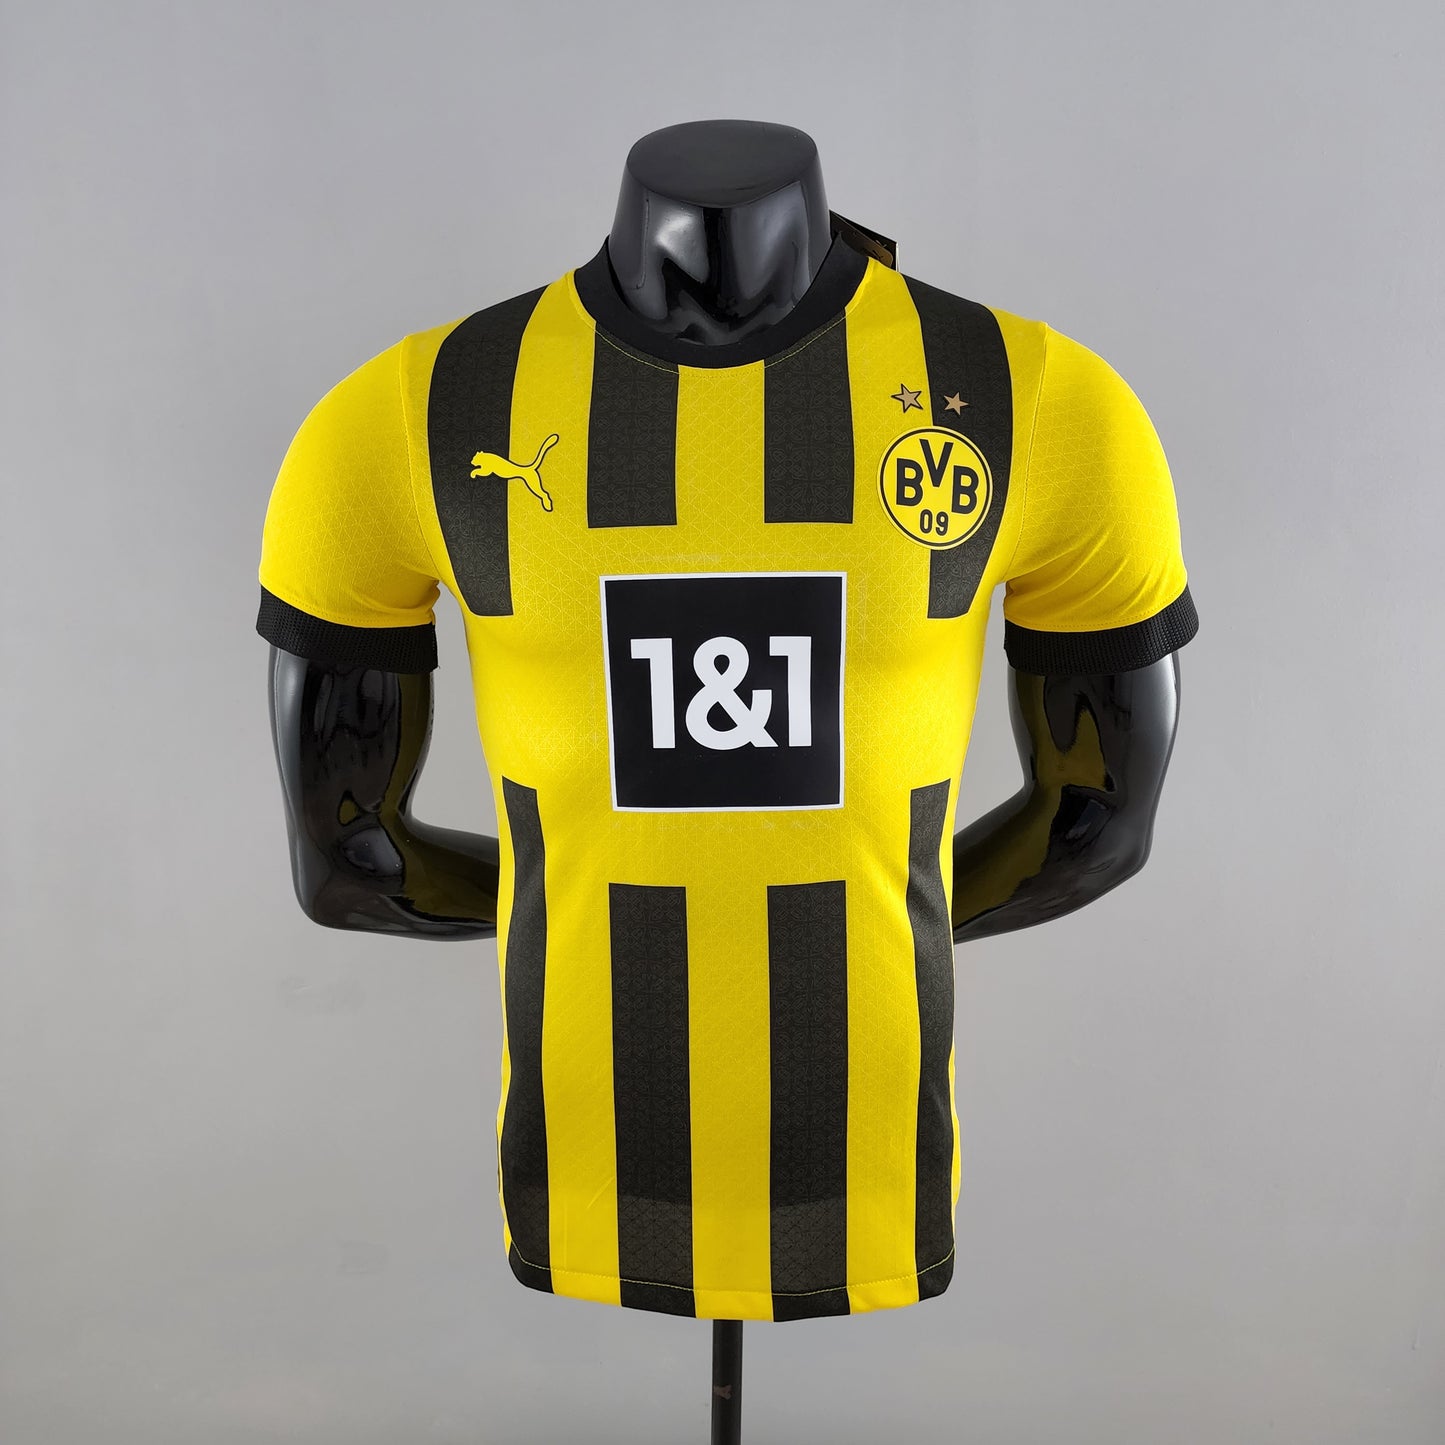 BVB Dortmund 2022/2023 Home Kit - Player Version